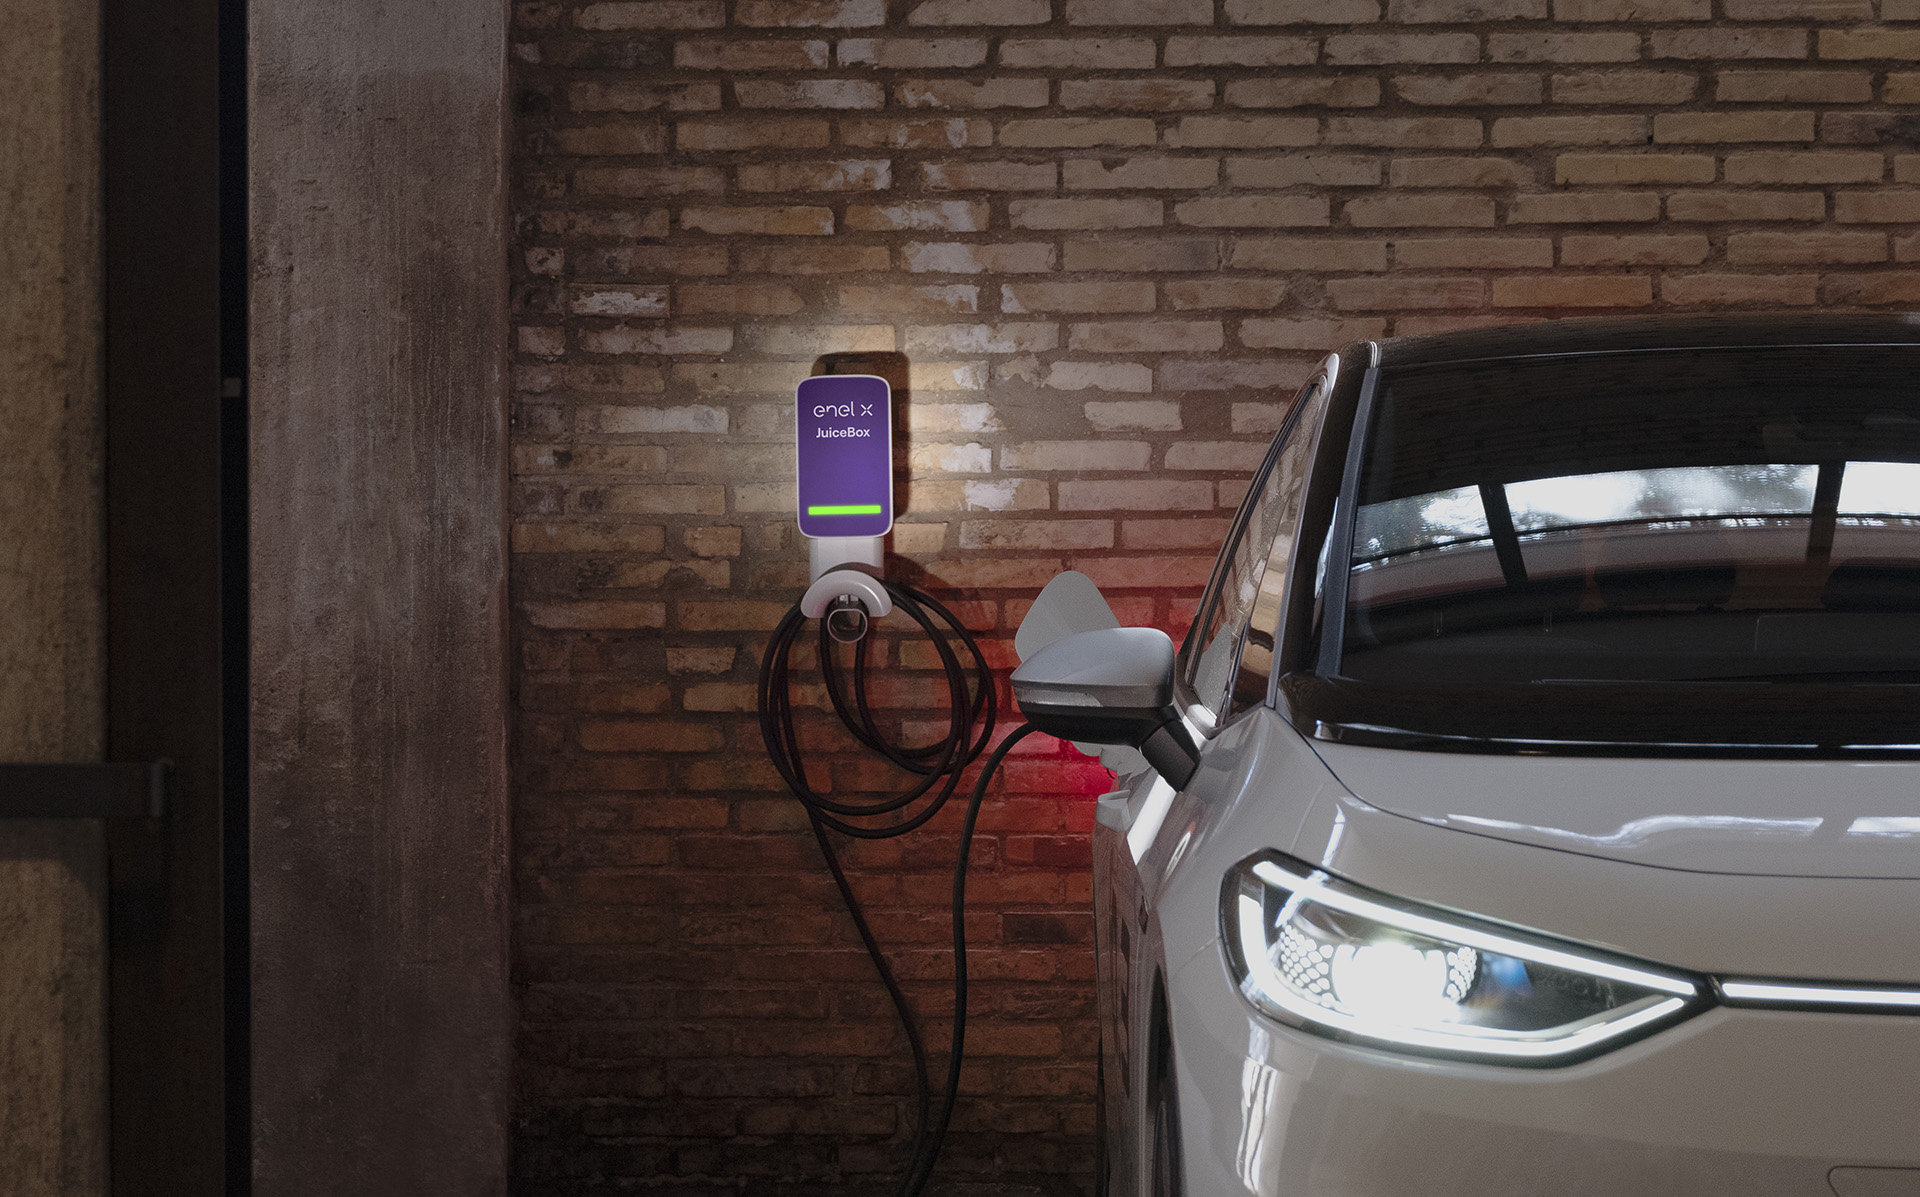 Smart terá apenas carros elétricos